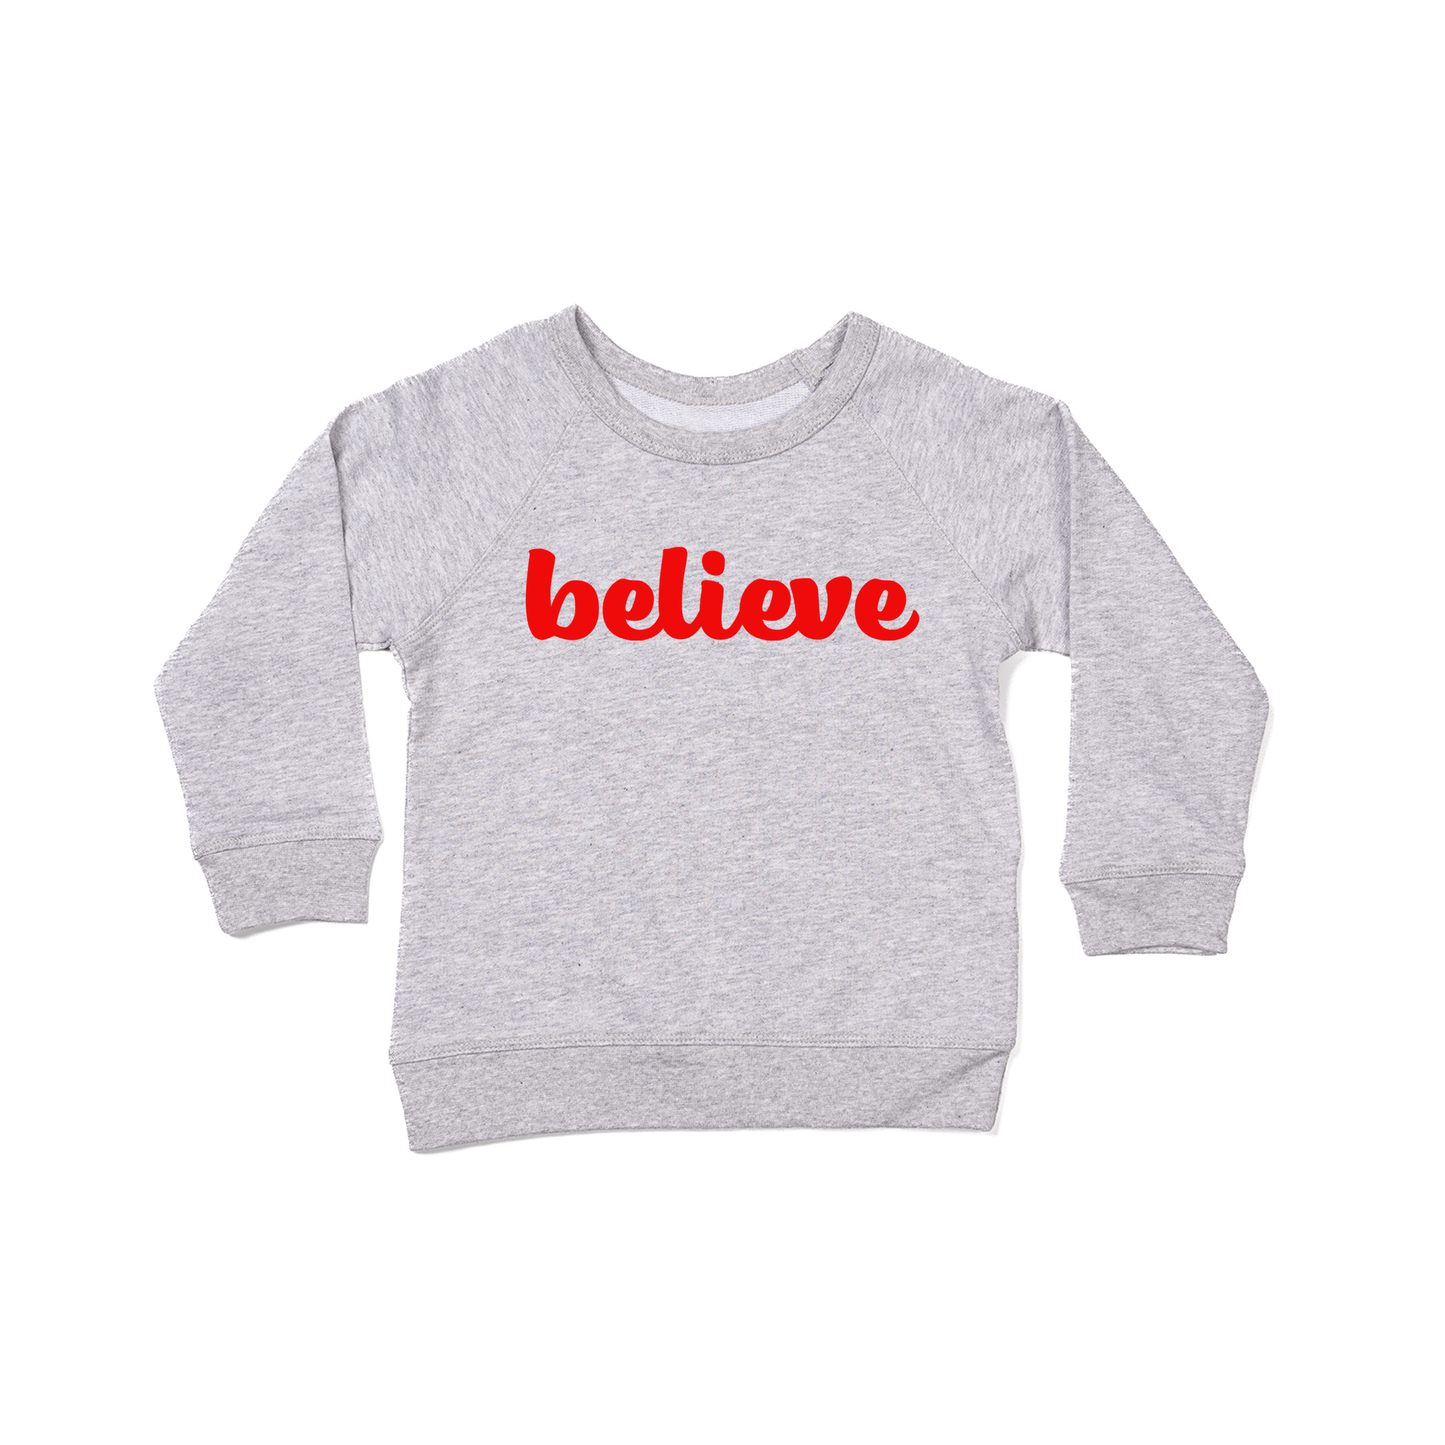 Believe (Thick Cursive, Red) - Kids Sweatshirt (Heather Gray)